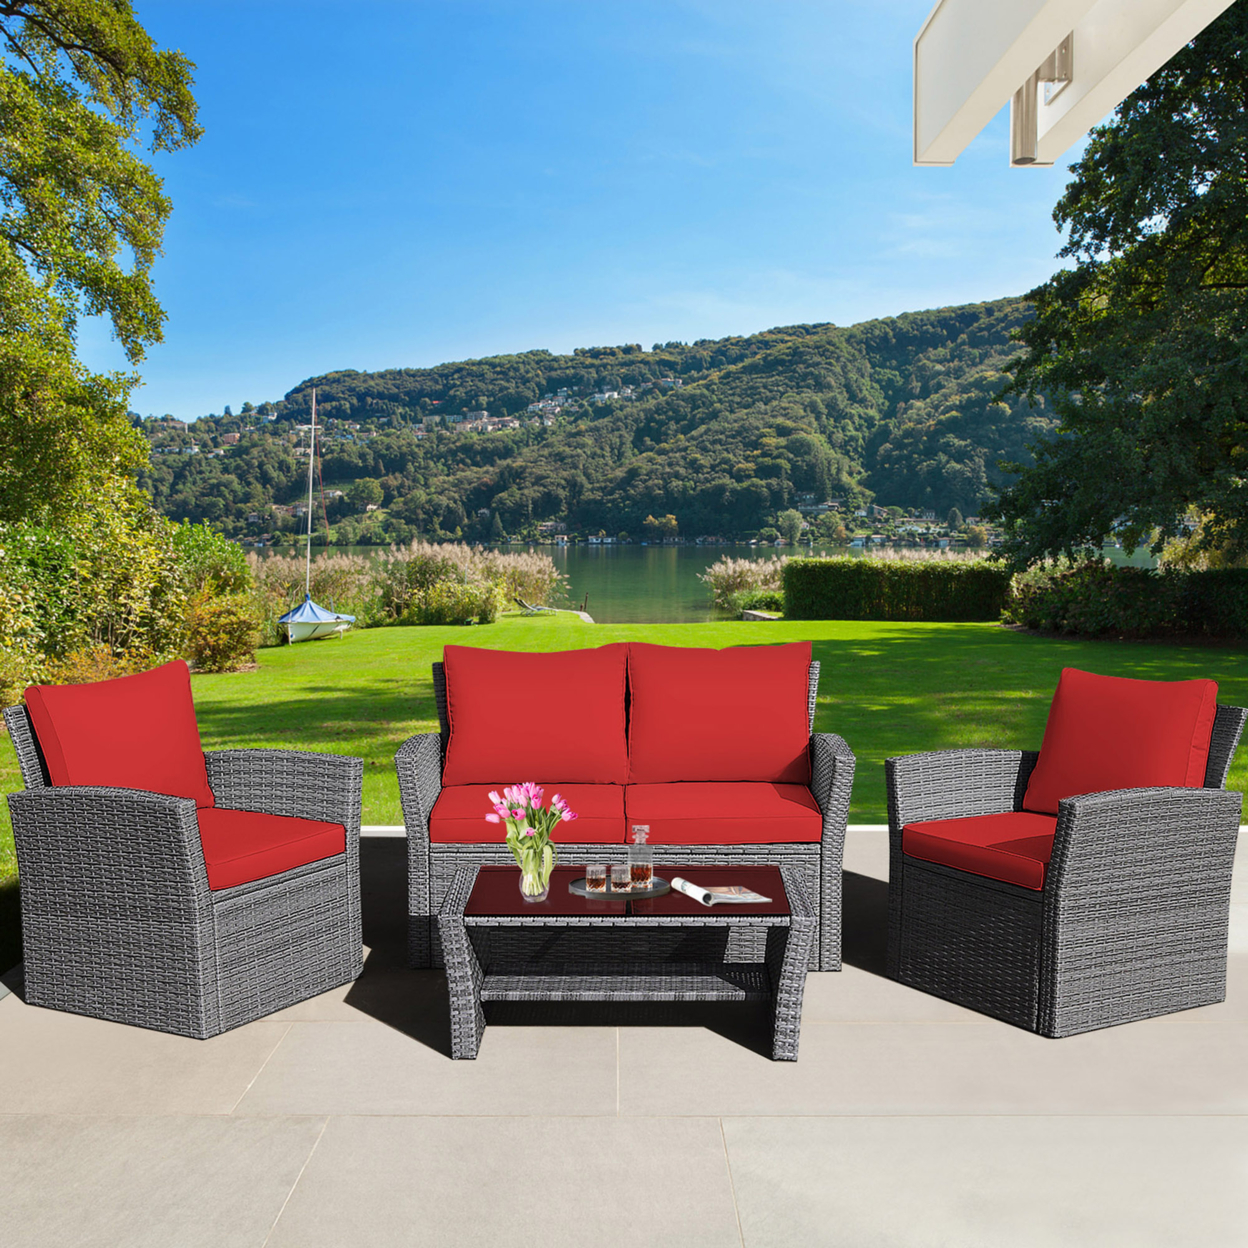 4PCS Patio Rattan Conversation Set Outdoor Furniture Set W/ Red Cushions